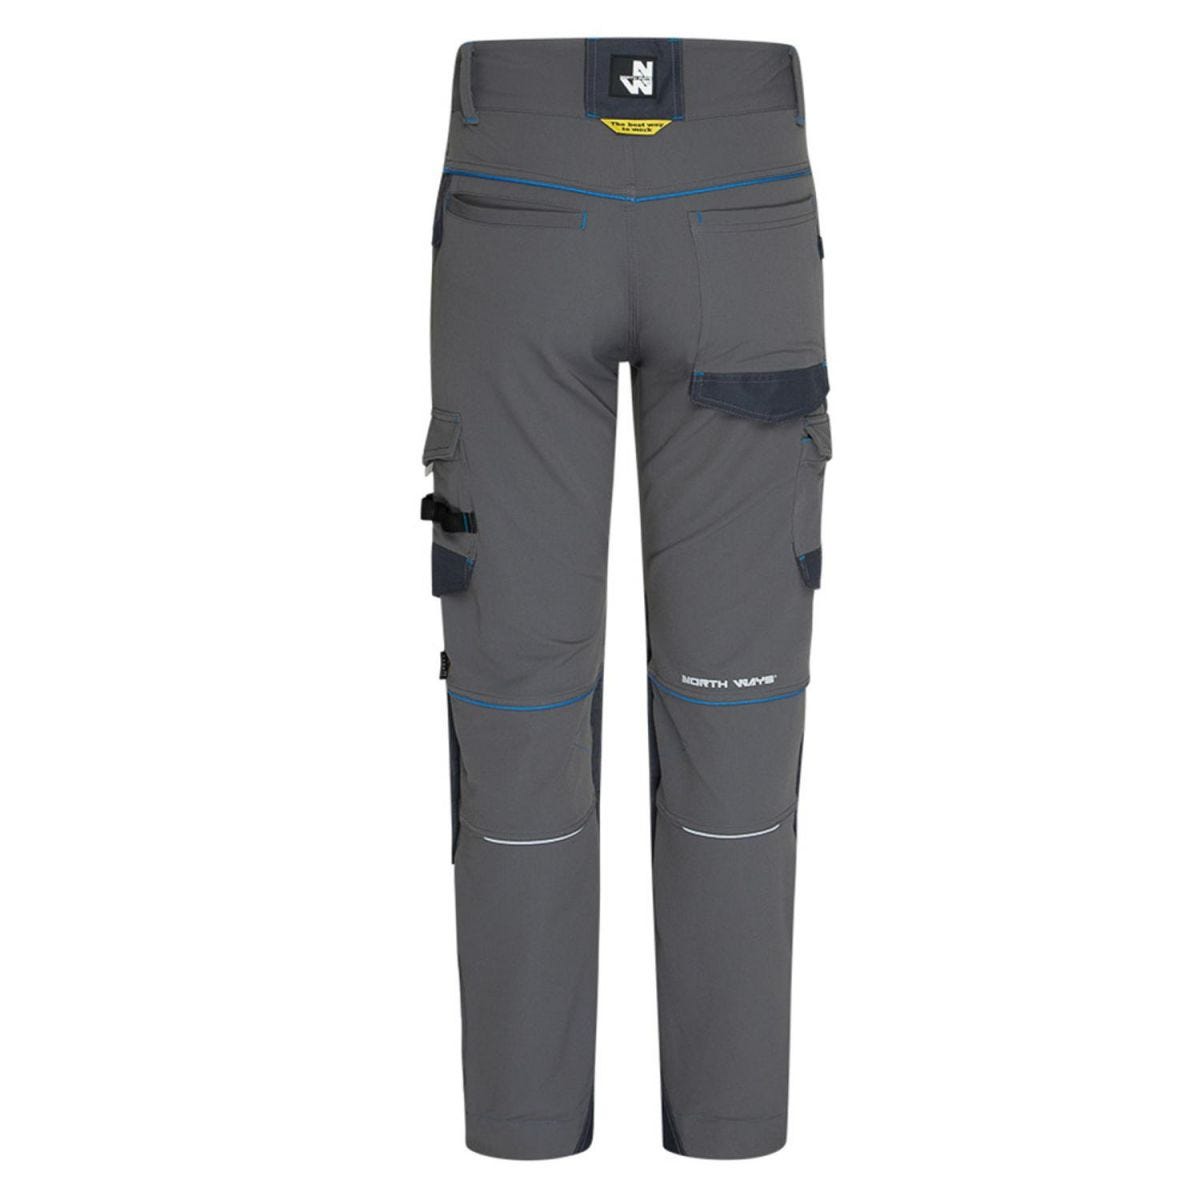 Pantalon de travail SACHA gris/bleu - North Ways - Taille 44 2